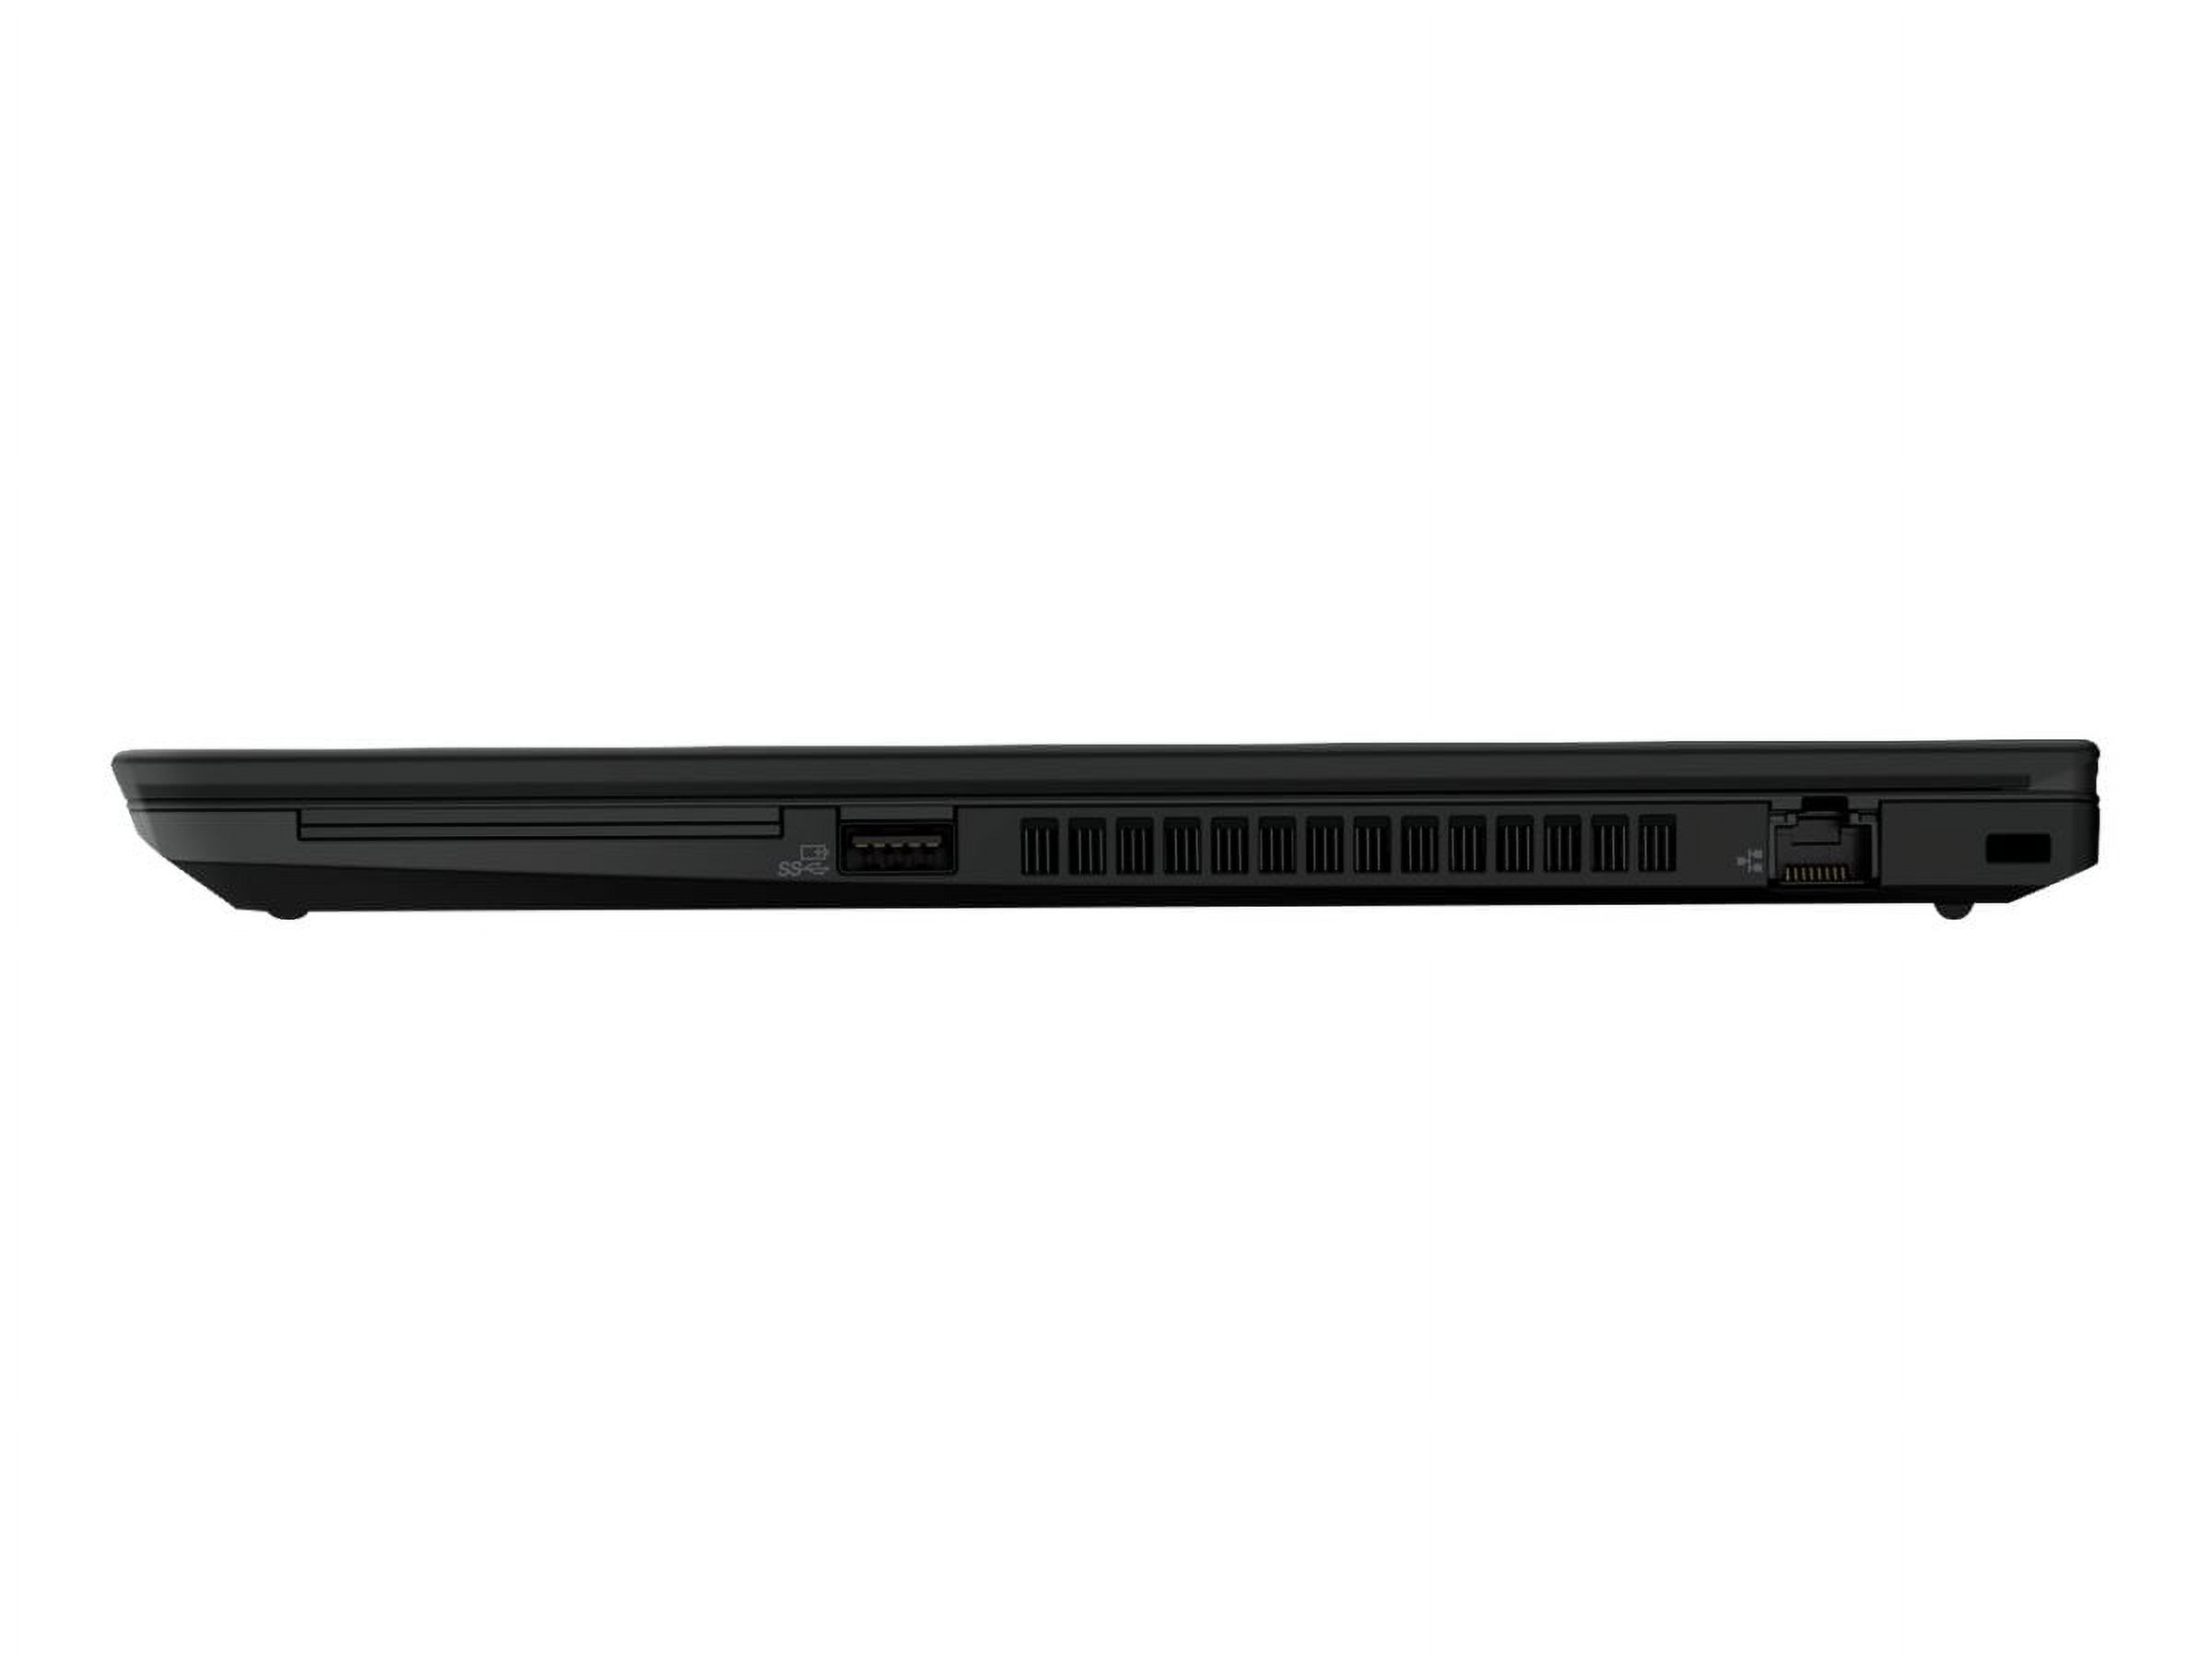 Lenovo ThinkPad T490 20N2 Intel Core i7 8565U 1.8 GHz Win 10 Pro 64- bit UHD Graphics GB RAM 512 GB SSD TCG Opal Encryption 2,